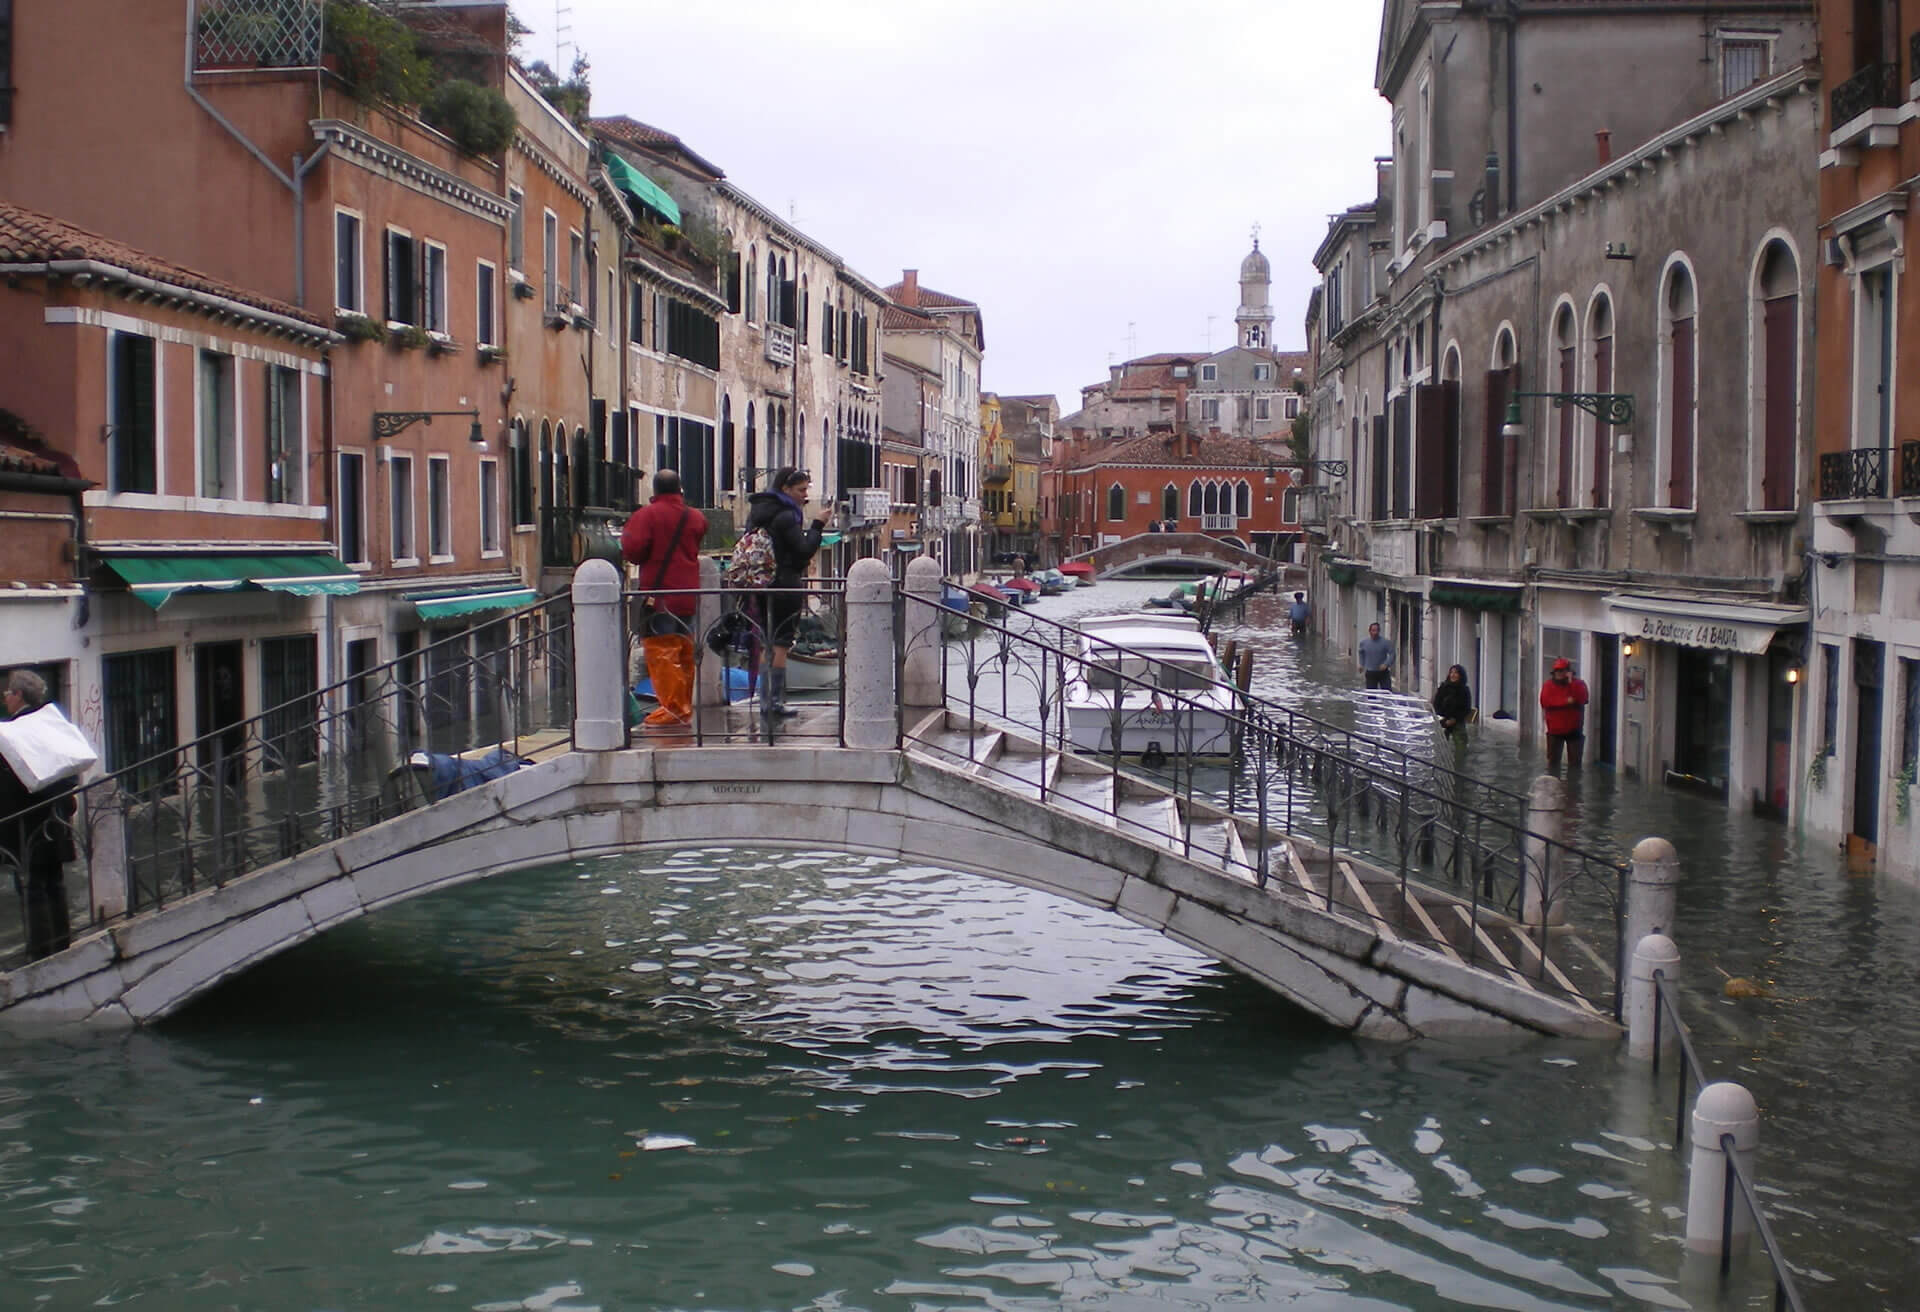 Acqua alta (high water) in Venice, 2008